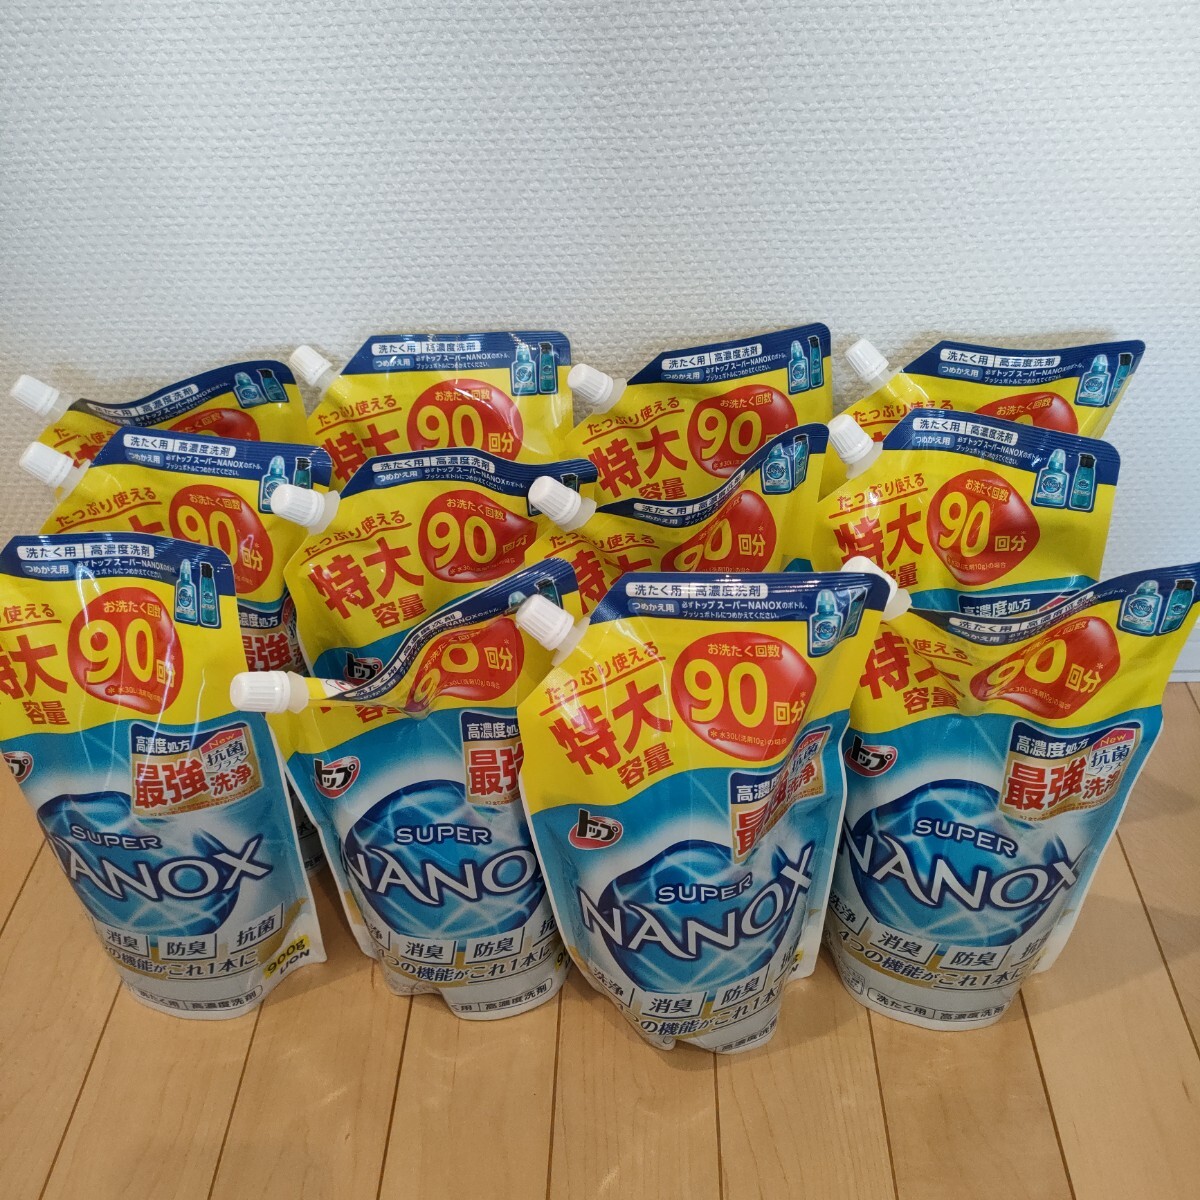  free shipping na knock s....900g 12 piece set NANOX lion LION laundry detergent 